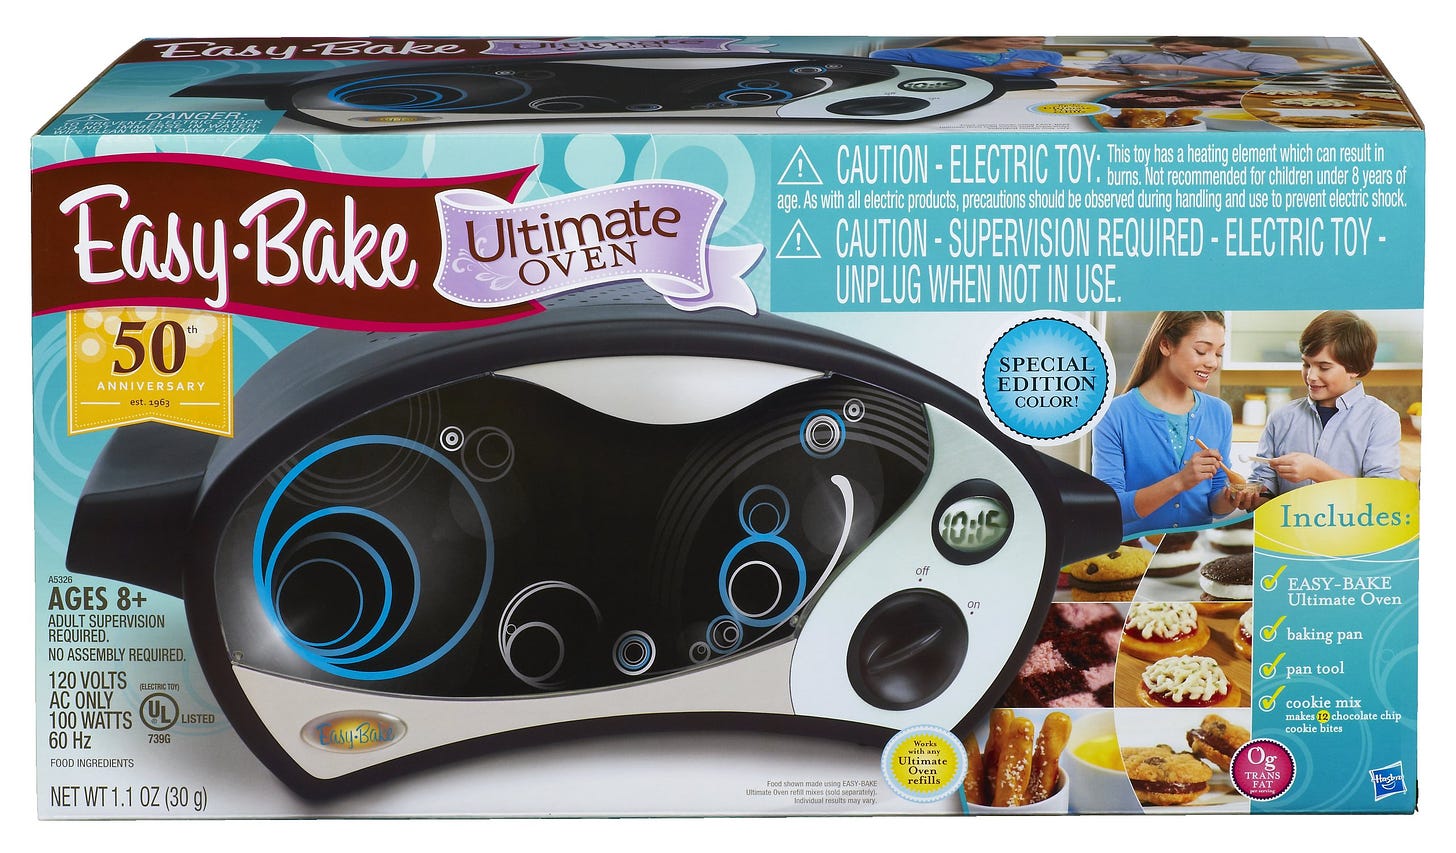 Amazon.com: Hasbro Easy-Bake Ultimate Oven, Black/Silver : Toys & Games